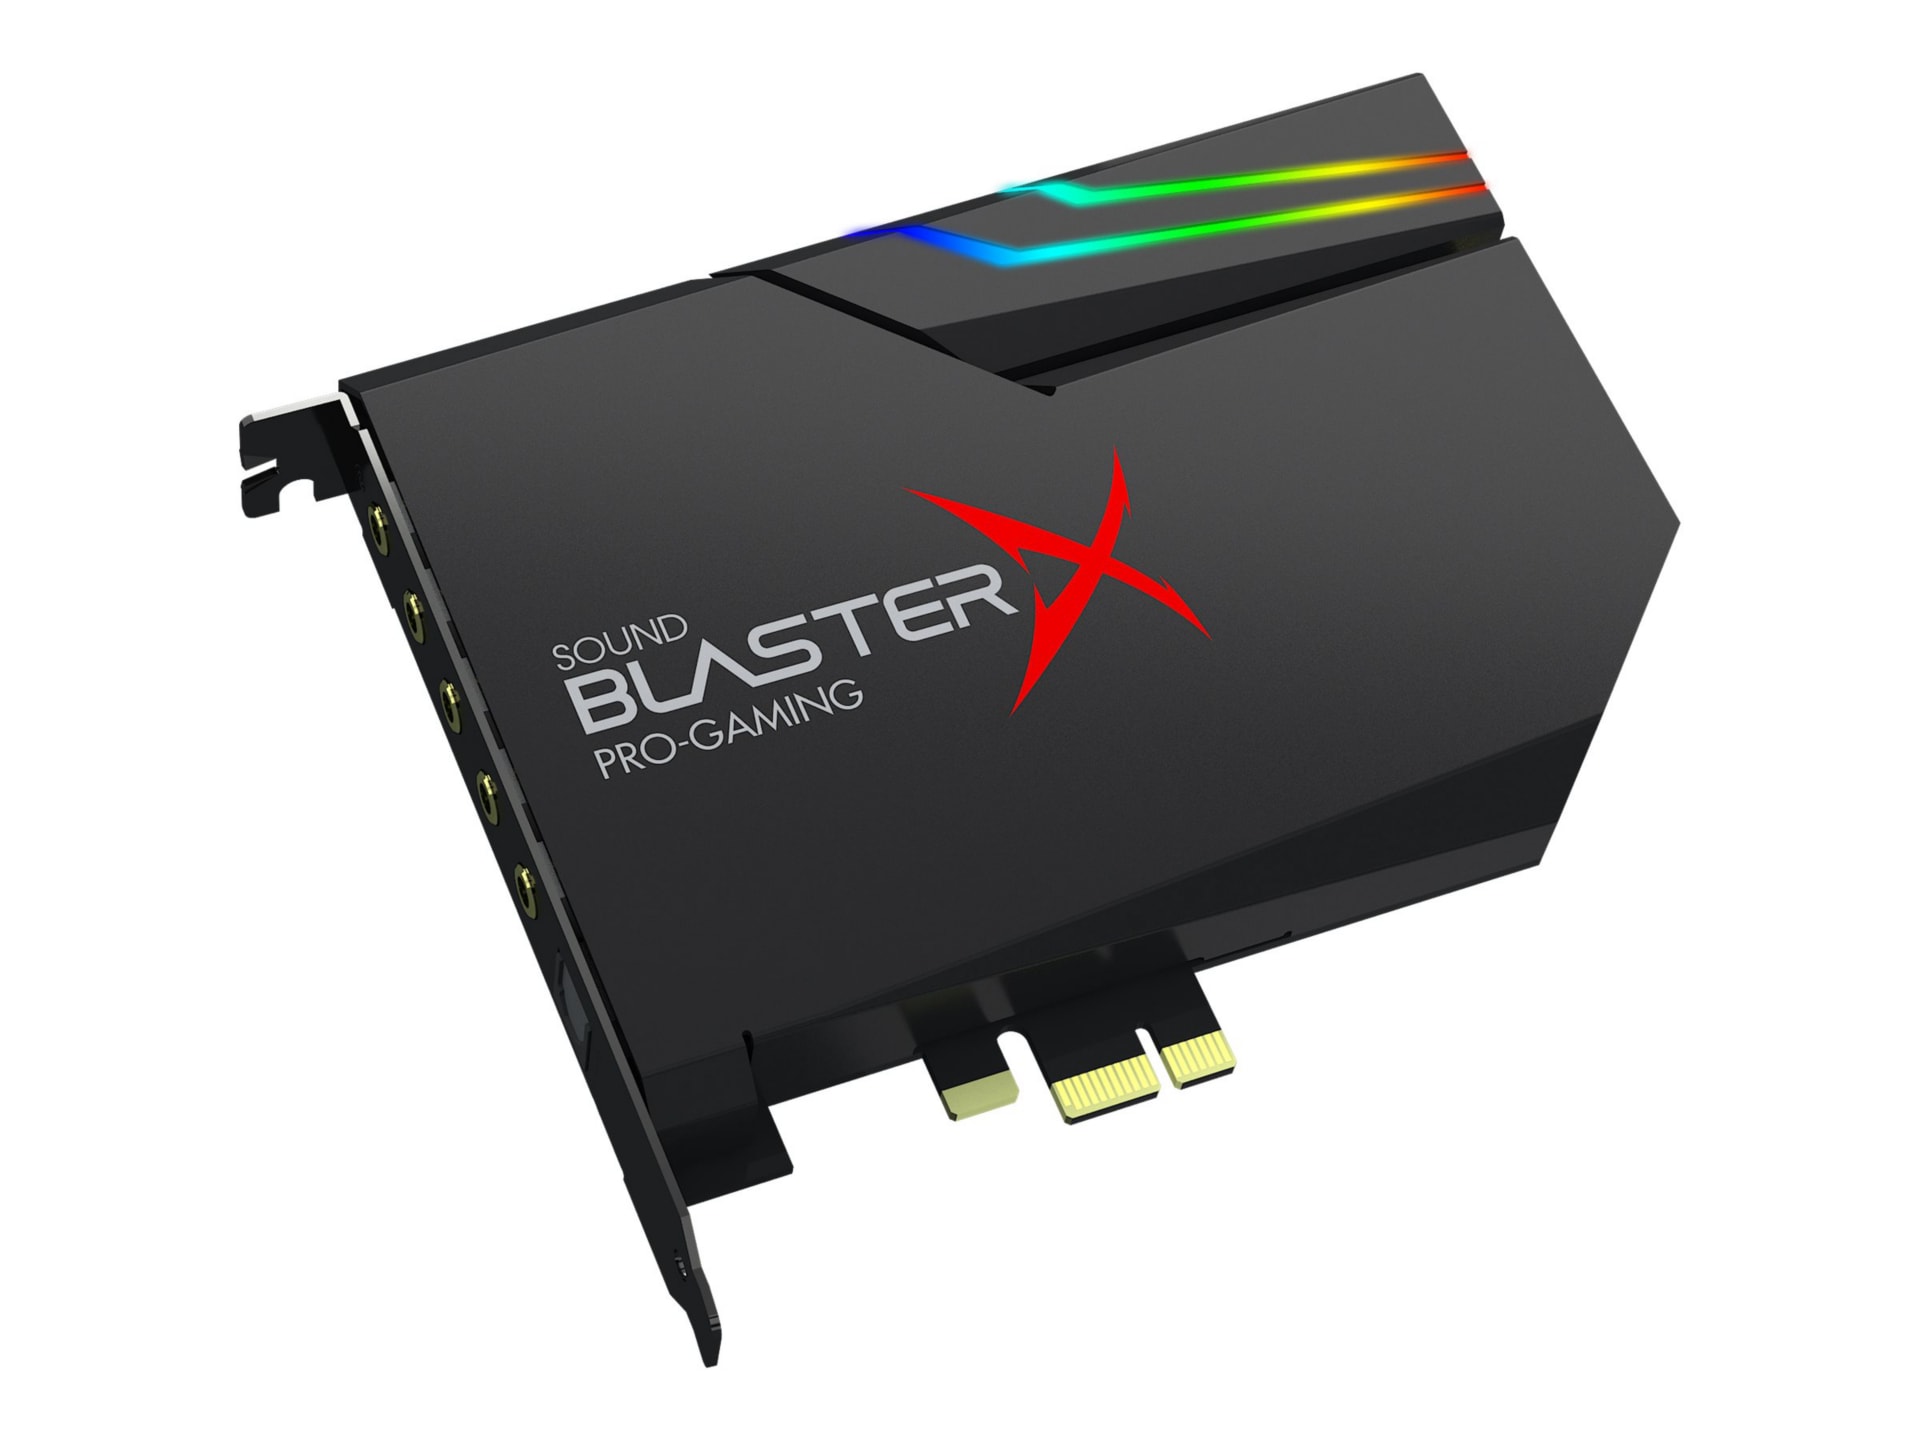 Creative Sound BlasterX AE-5 Plus Sound Card